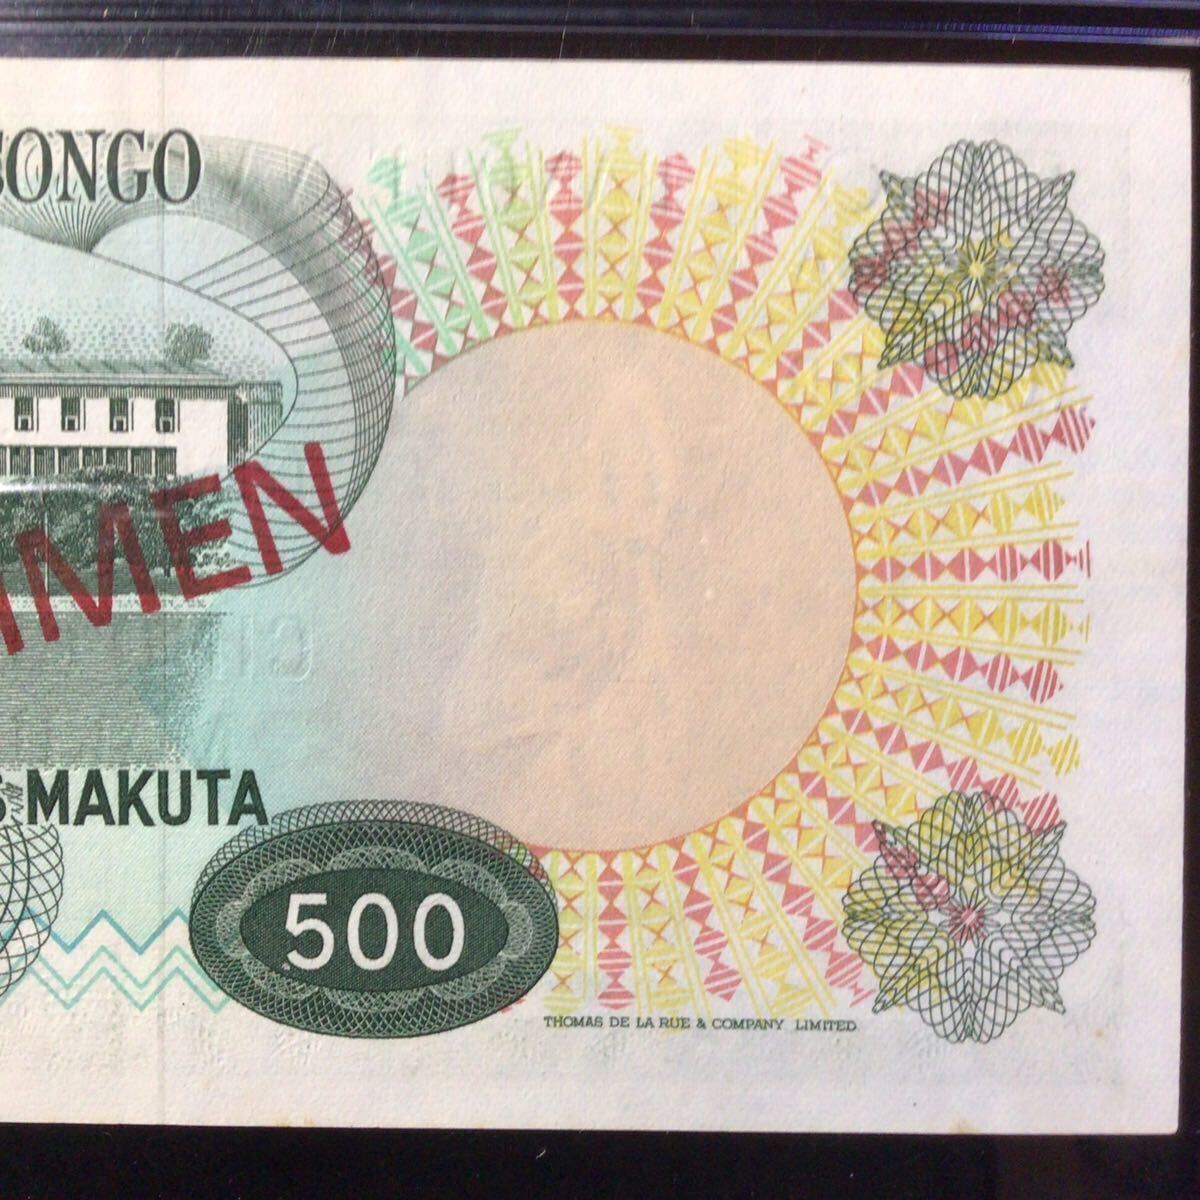 World Banknote Grading CONGO Democratic Republic《Specimen》5 Zaires = 500 Makuta【1968】『PMG Grading Choice Uncirculated 64』_画像7